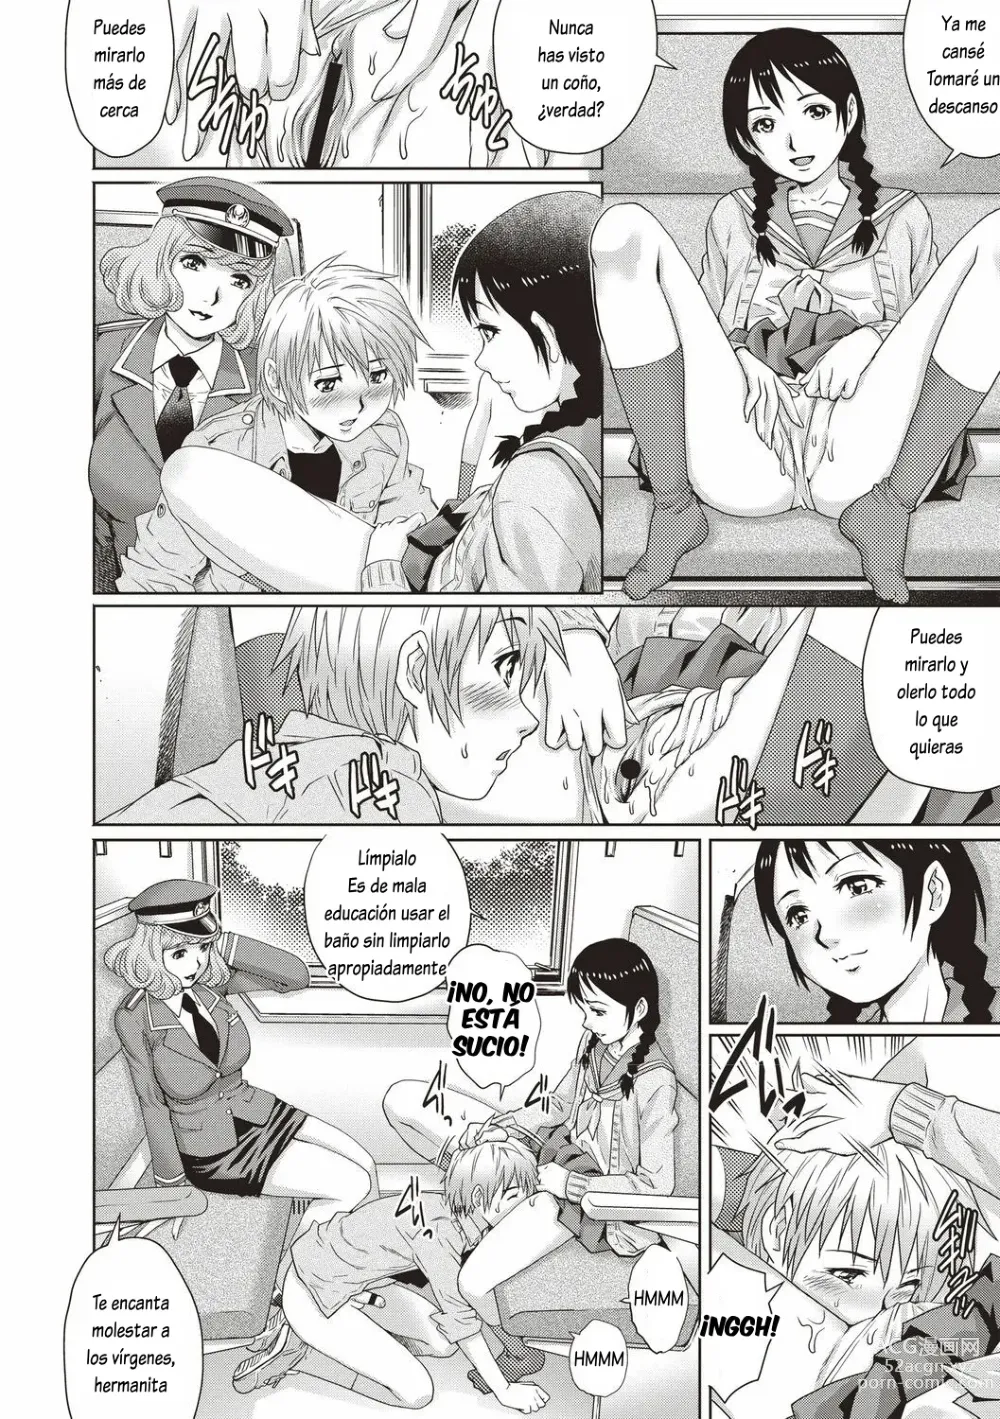 Page 4 of manga Doutei Tetsudou